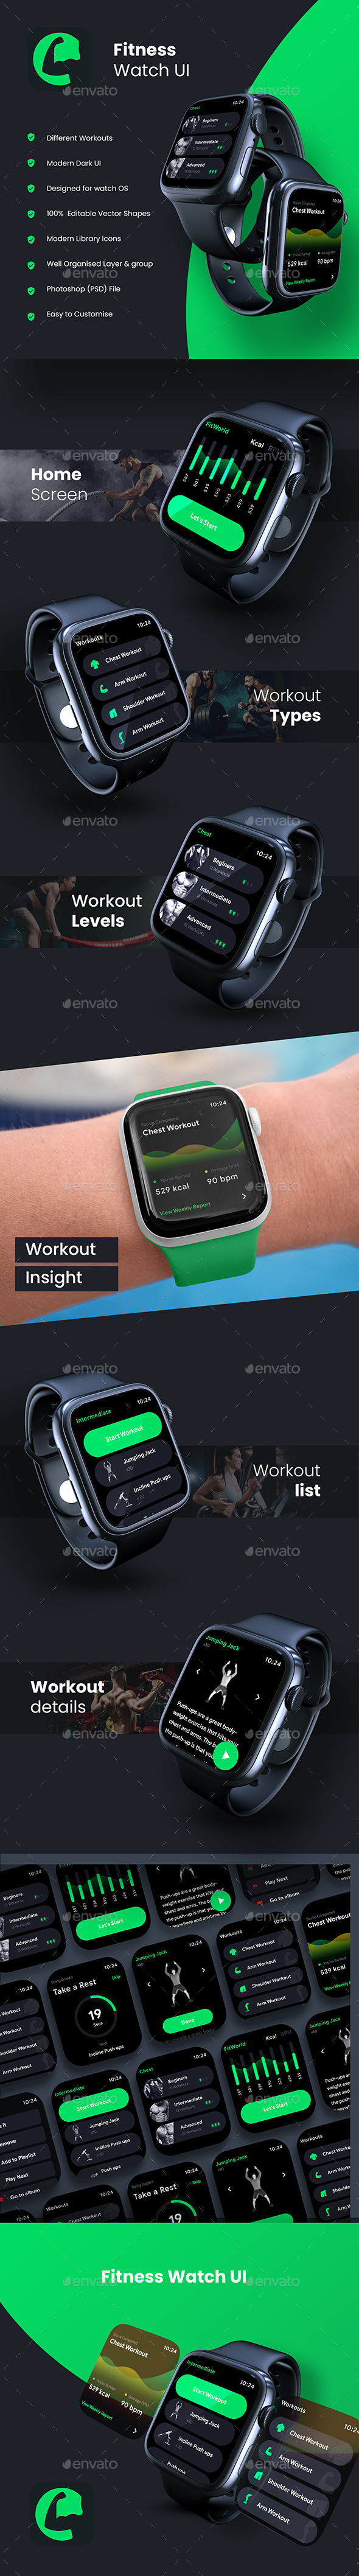 Fitness Tracking Watch App UI | Workout watch UI | Fitness Tracker App UI